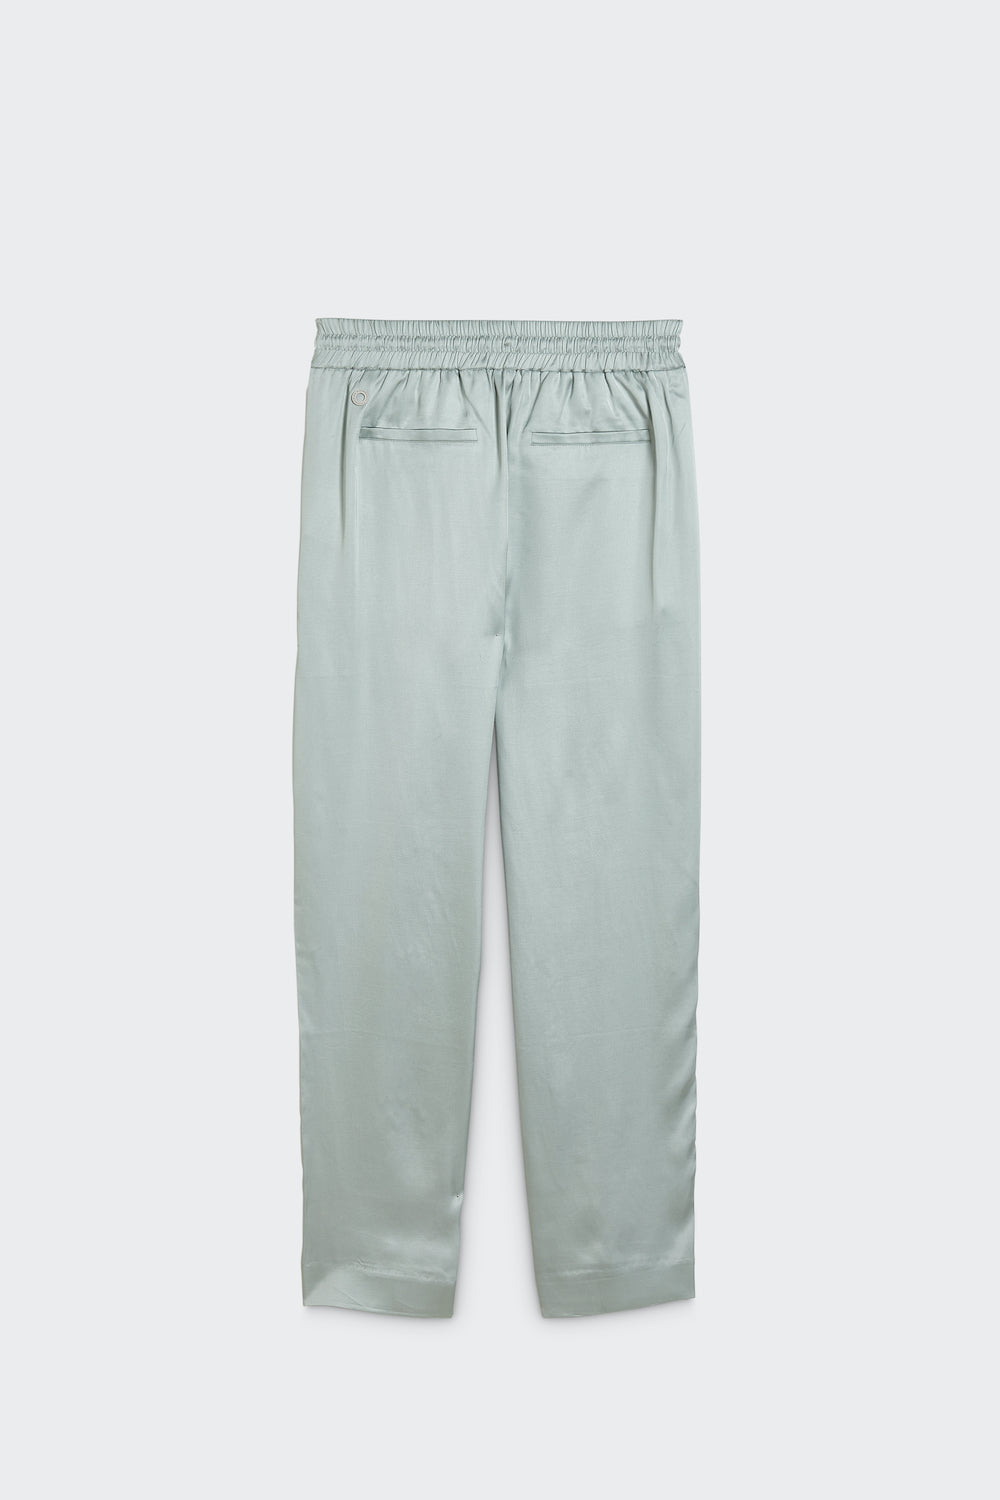 Viscose Slipover Pants with Welt Pockets